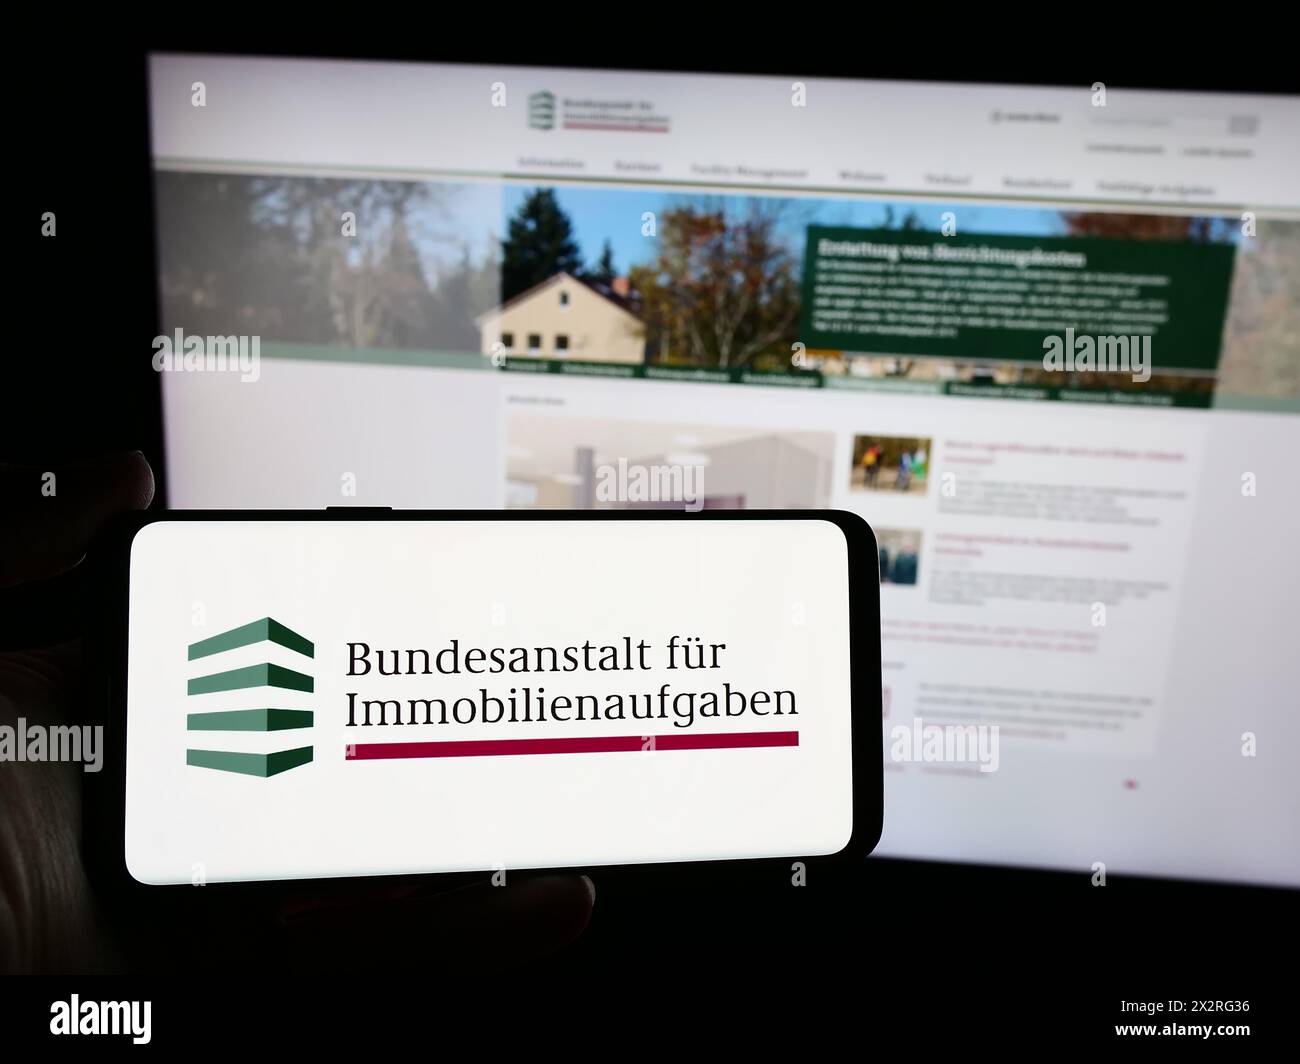 Person holding smartphone with logo of German agency Bundesanstalt für Immobilienaufgaben (BImA) in front of website. Focus on phone display. Stock Photo